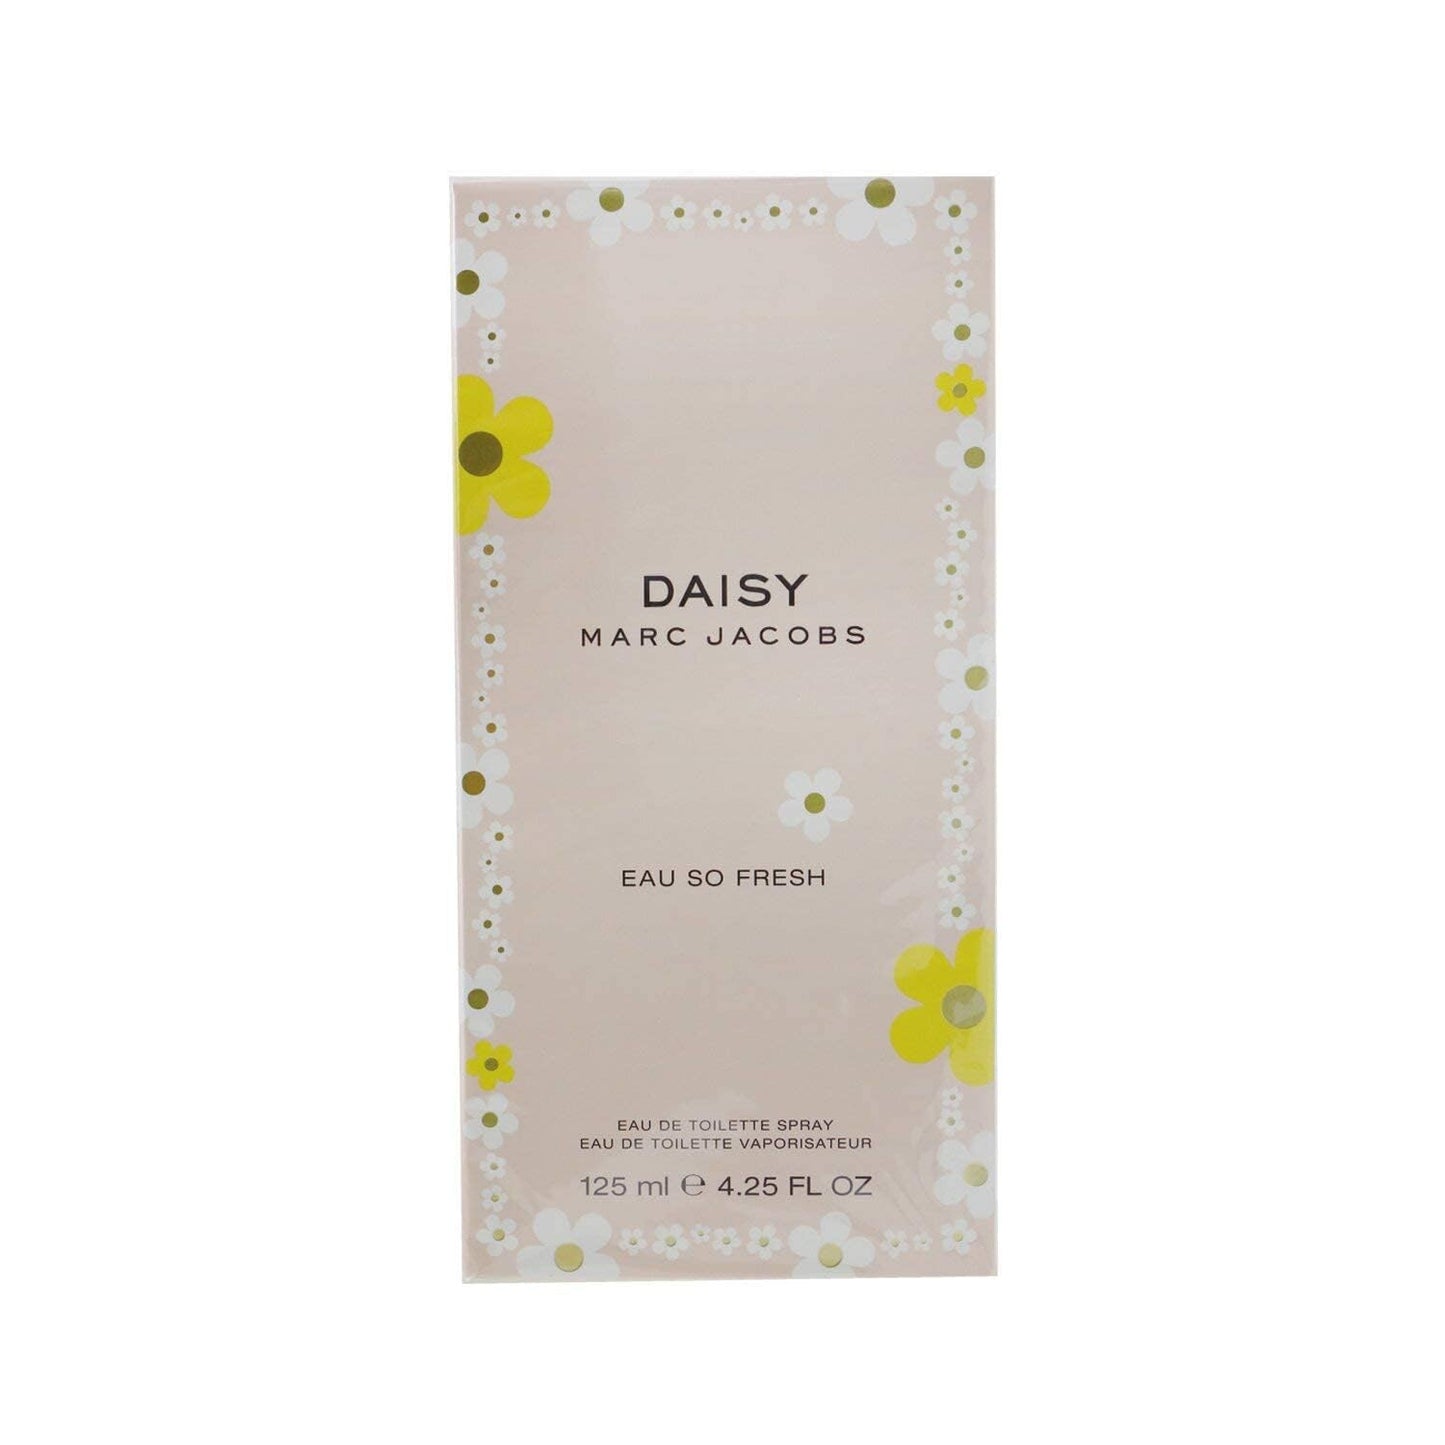 Marc Jacobs Daisy Eau So Fresh Eau de Toilette Spray-125ml/4.25 oz.